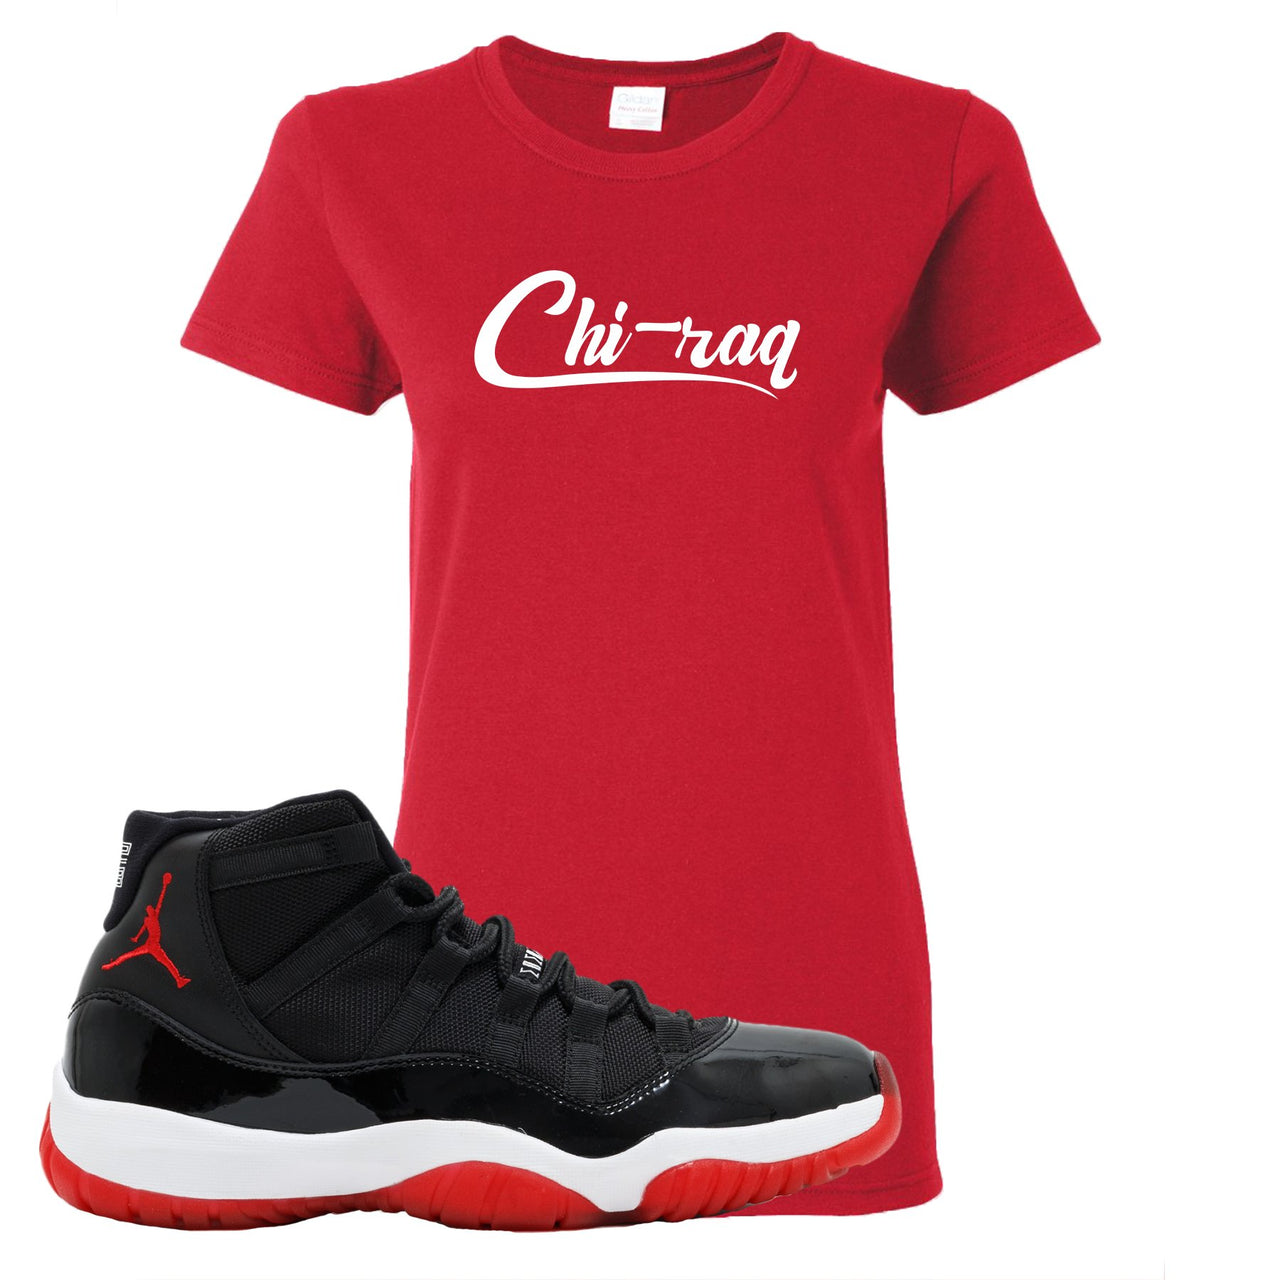 Jordan 11 Bred Chi-raq Red Sneaker Hook Up Women's T-Shirt